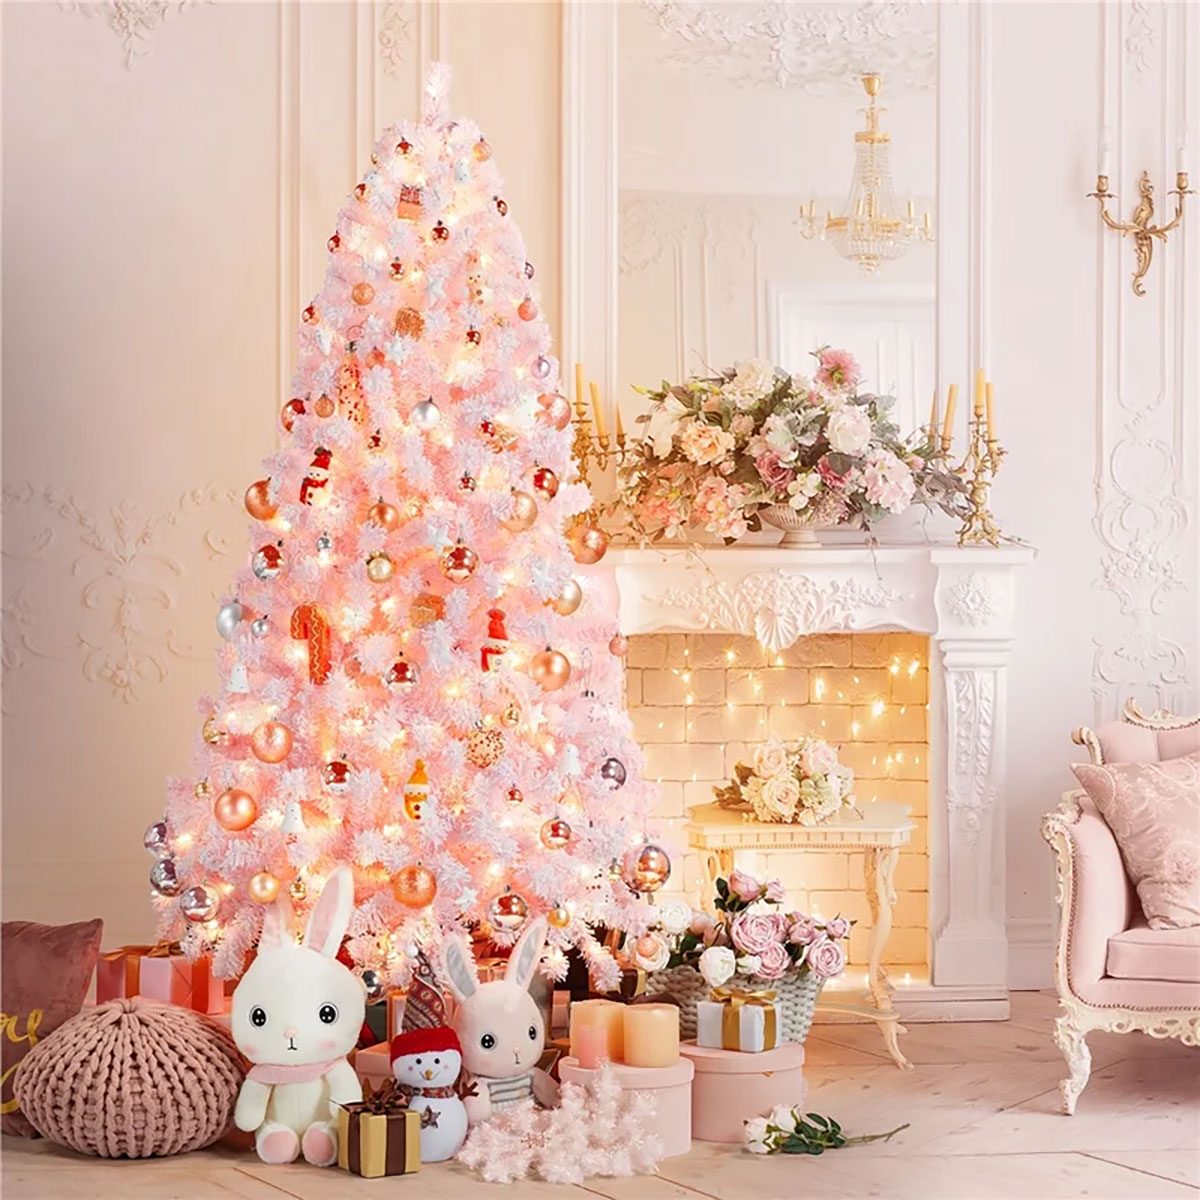 Christmas Tree Decorating Ideas: 20 Gorgeous DIY Ideas  Frosted christmas  tree, Traditional christmas tree, White christmas tree decorations